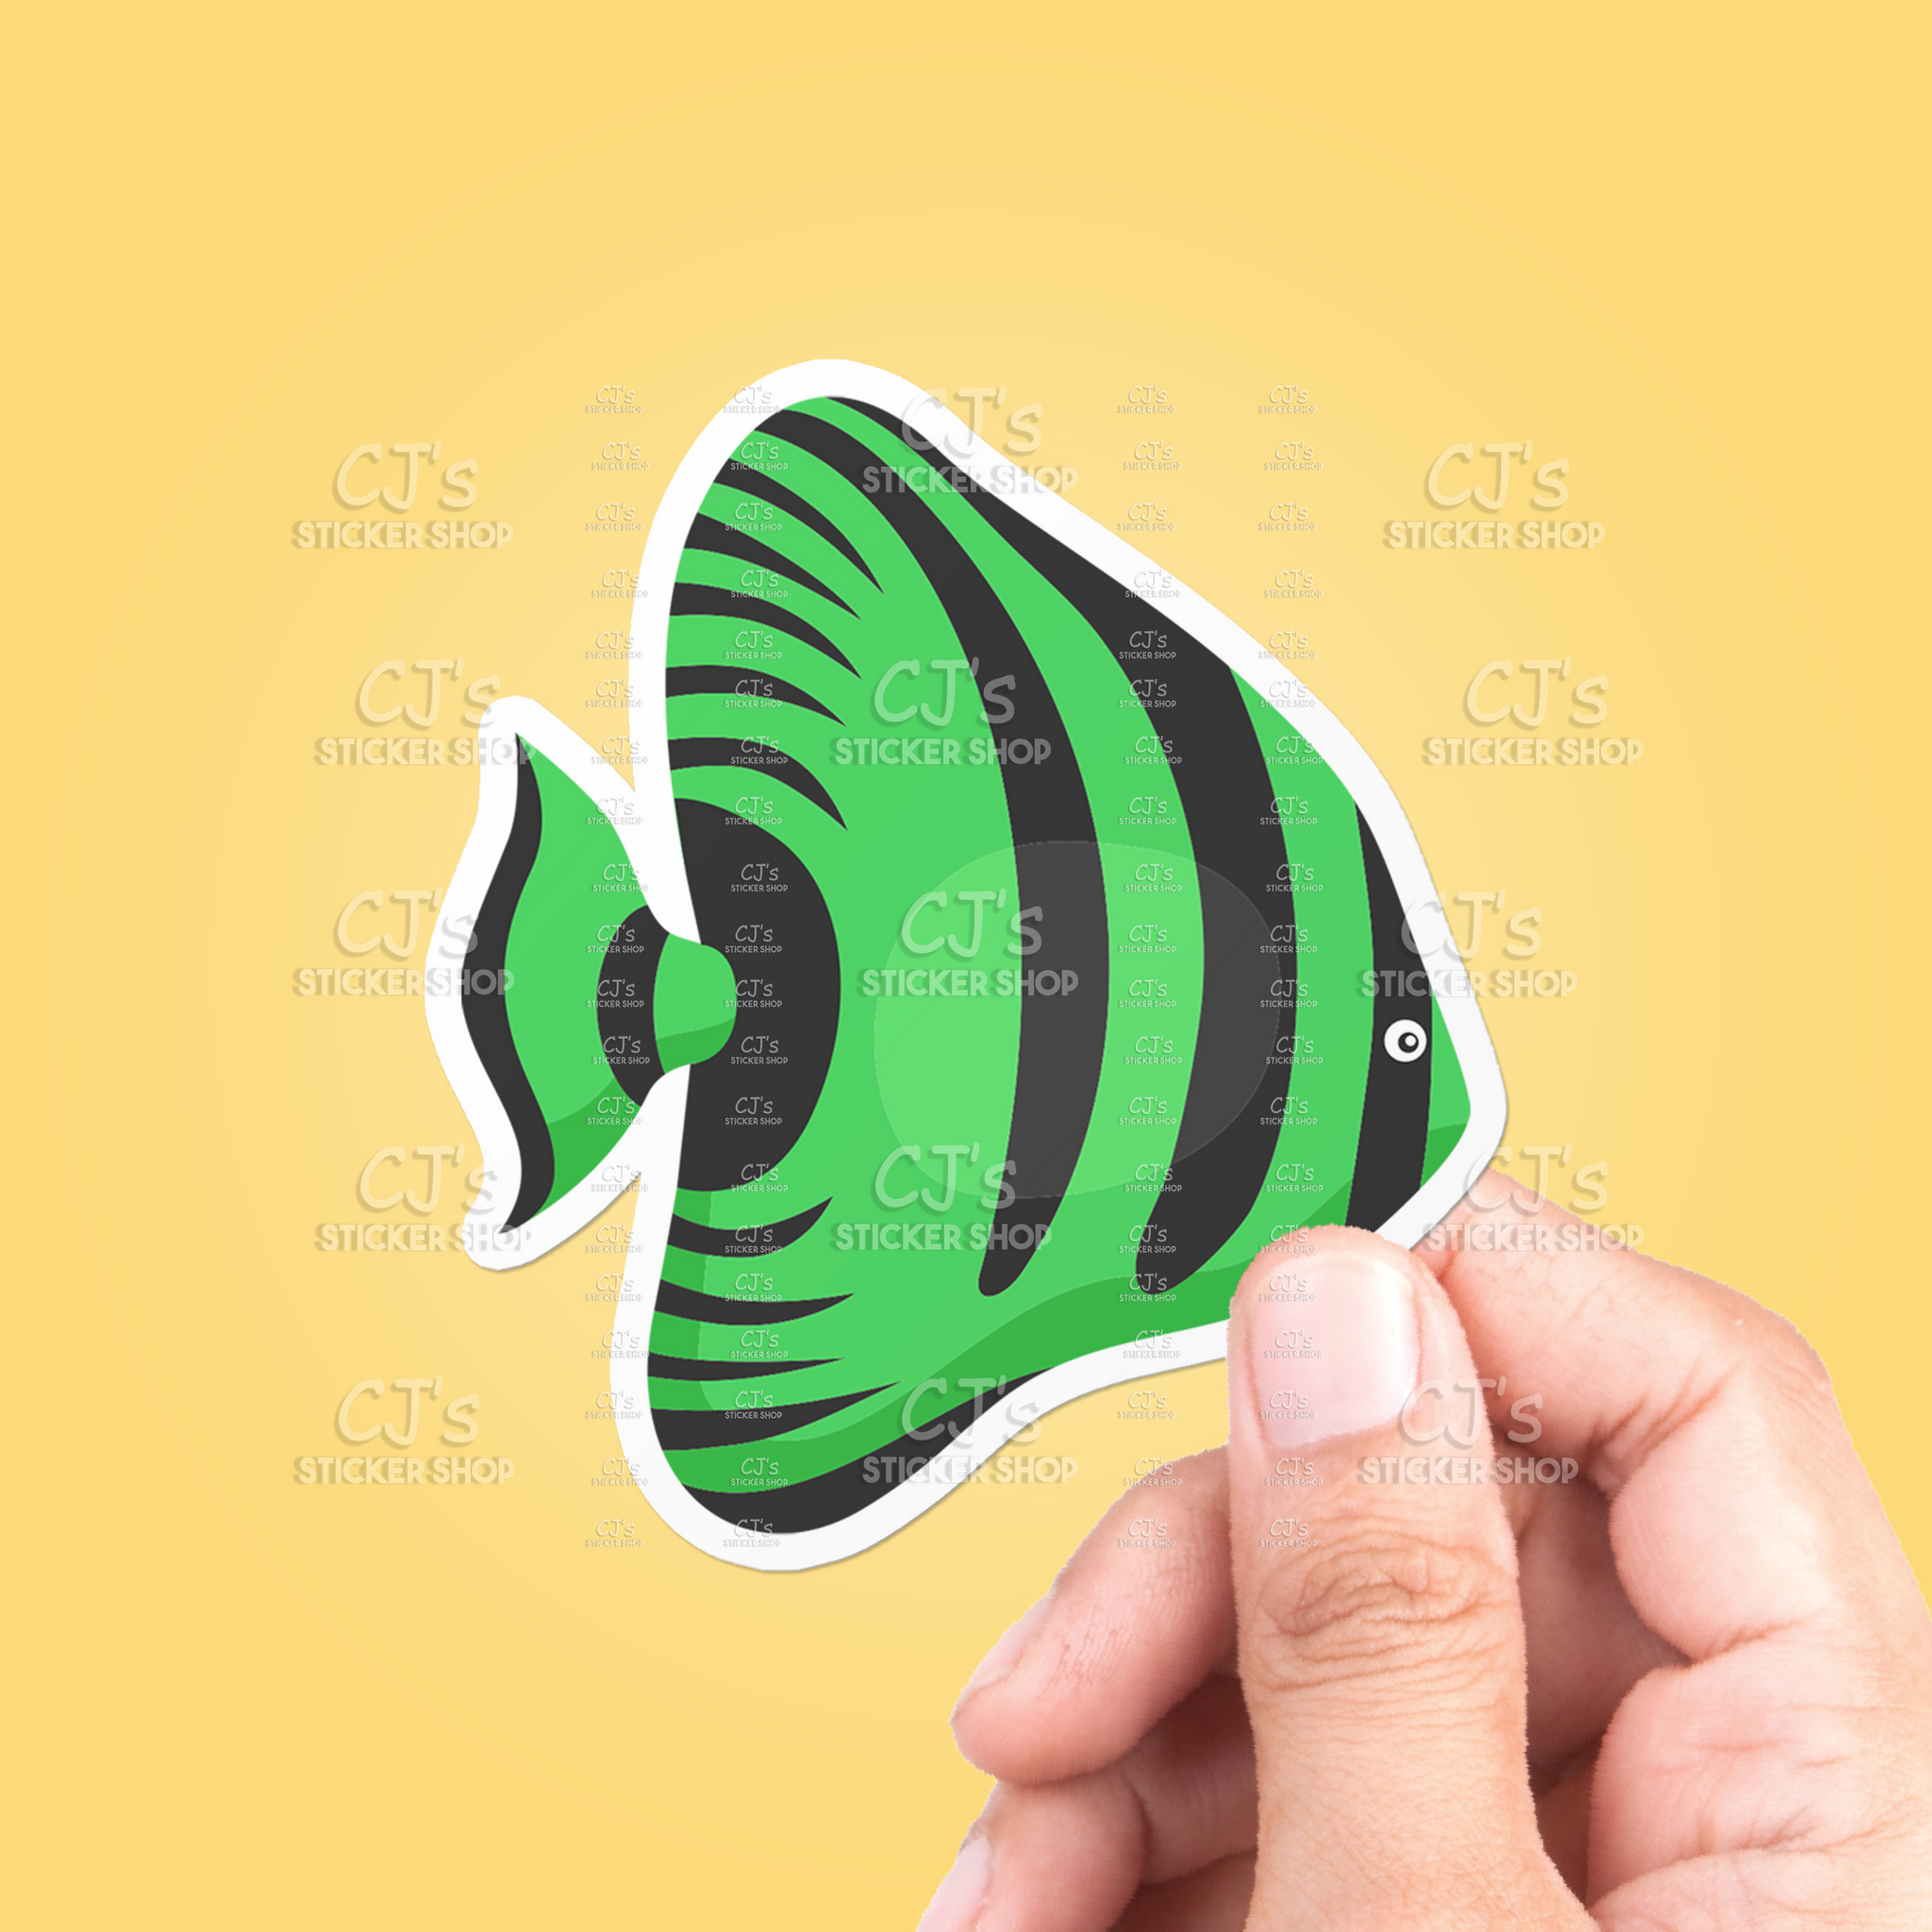 Ocean Fish #12 Sticker